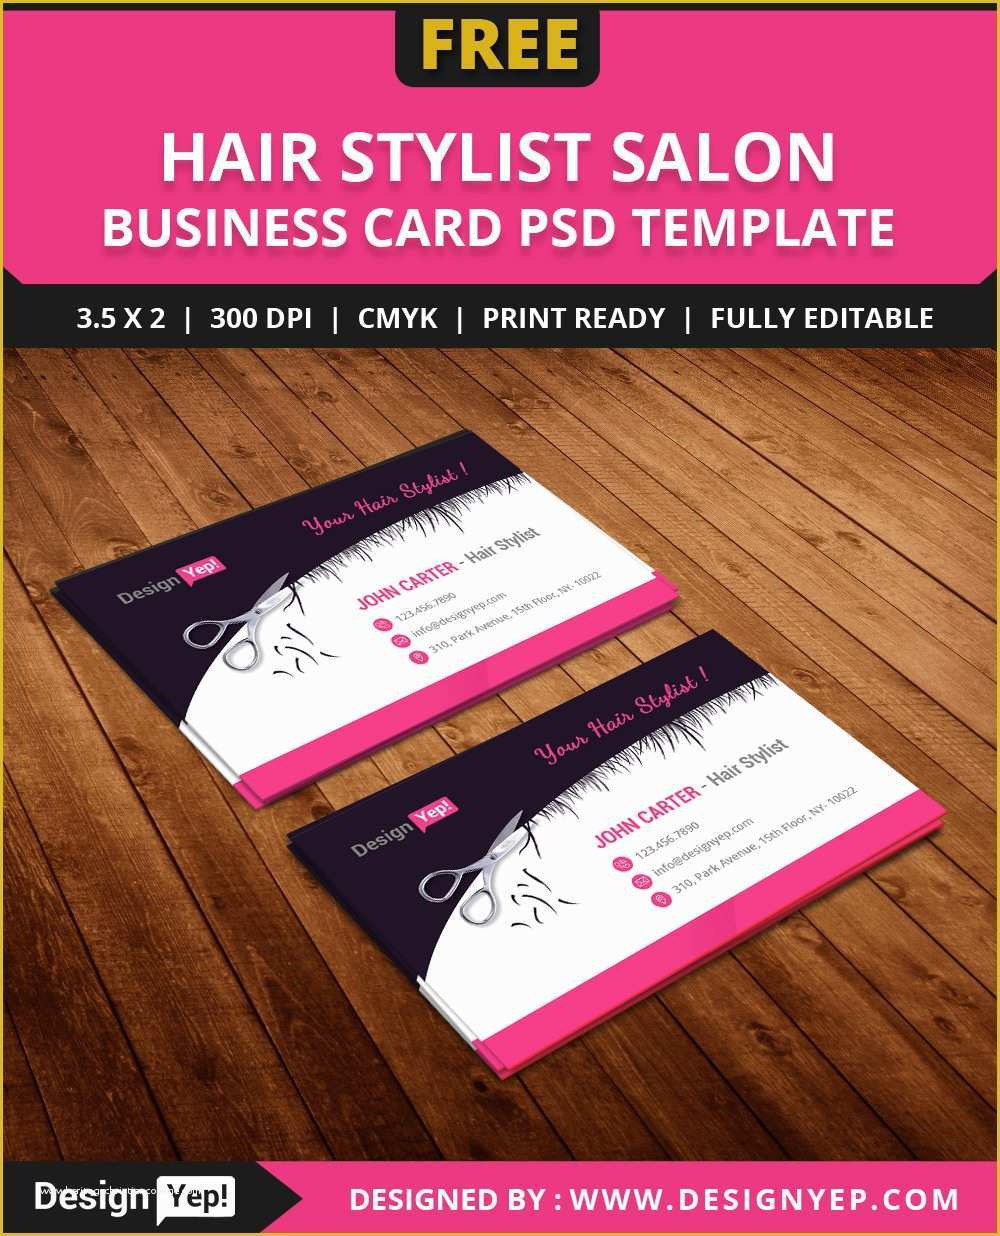 Calling Card Template Free Of Free Hair Stylist Salon Business Card Template Psd Designyep